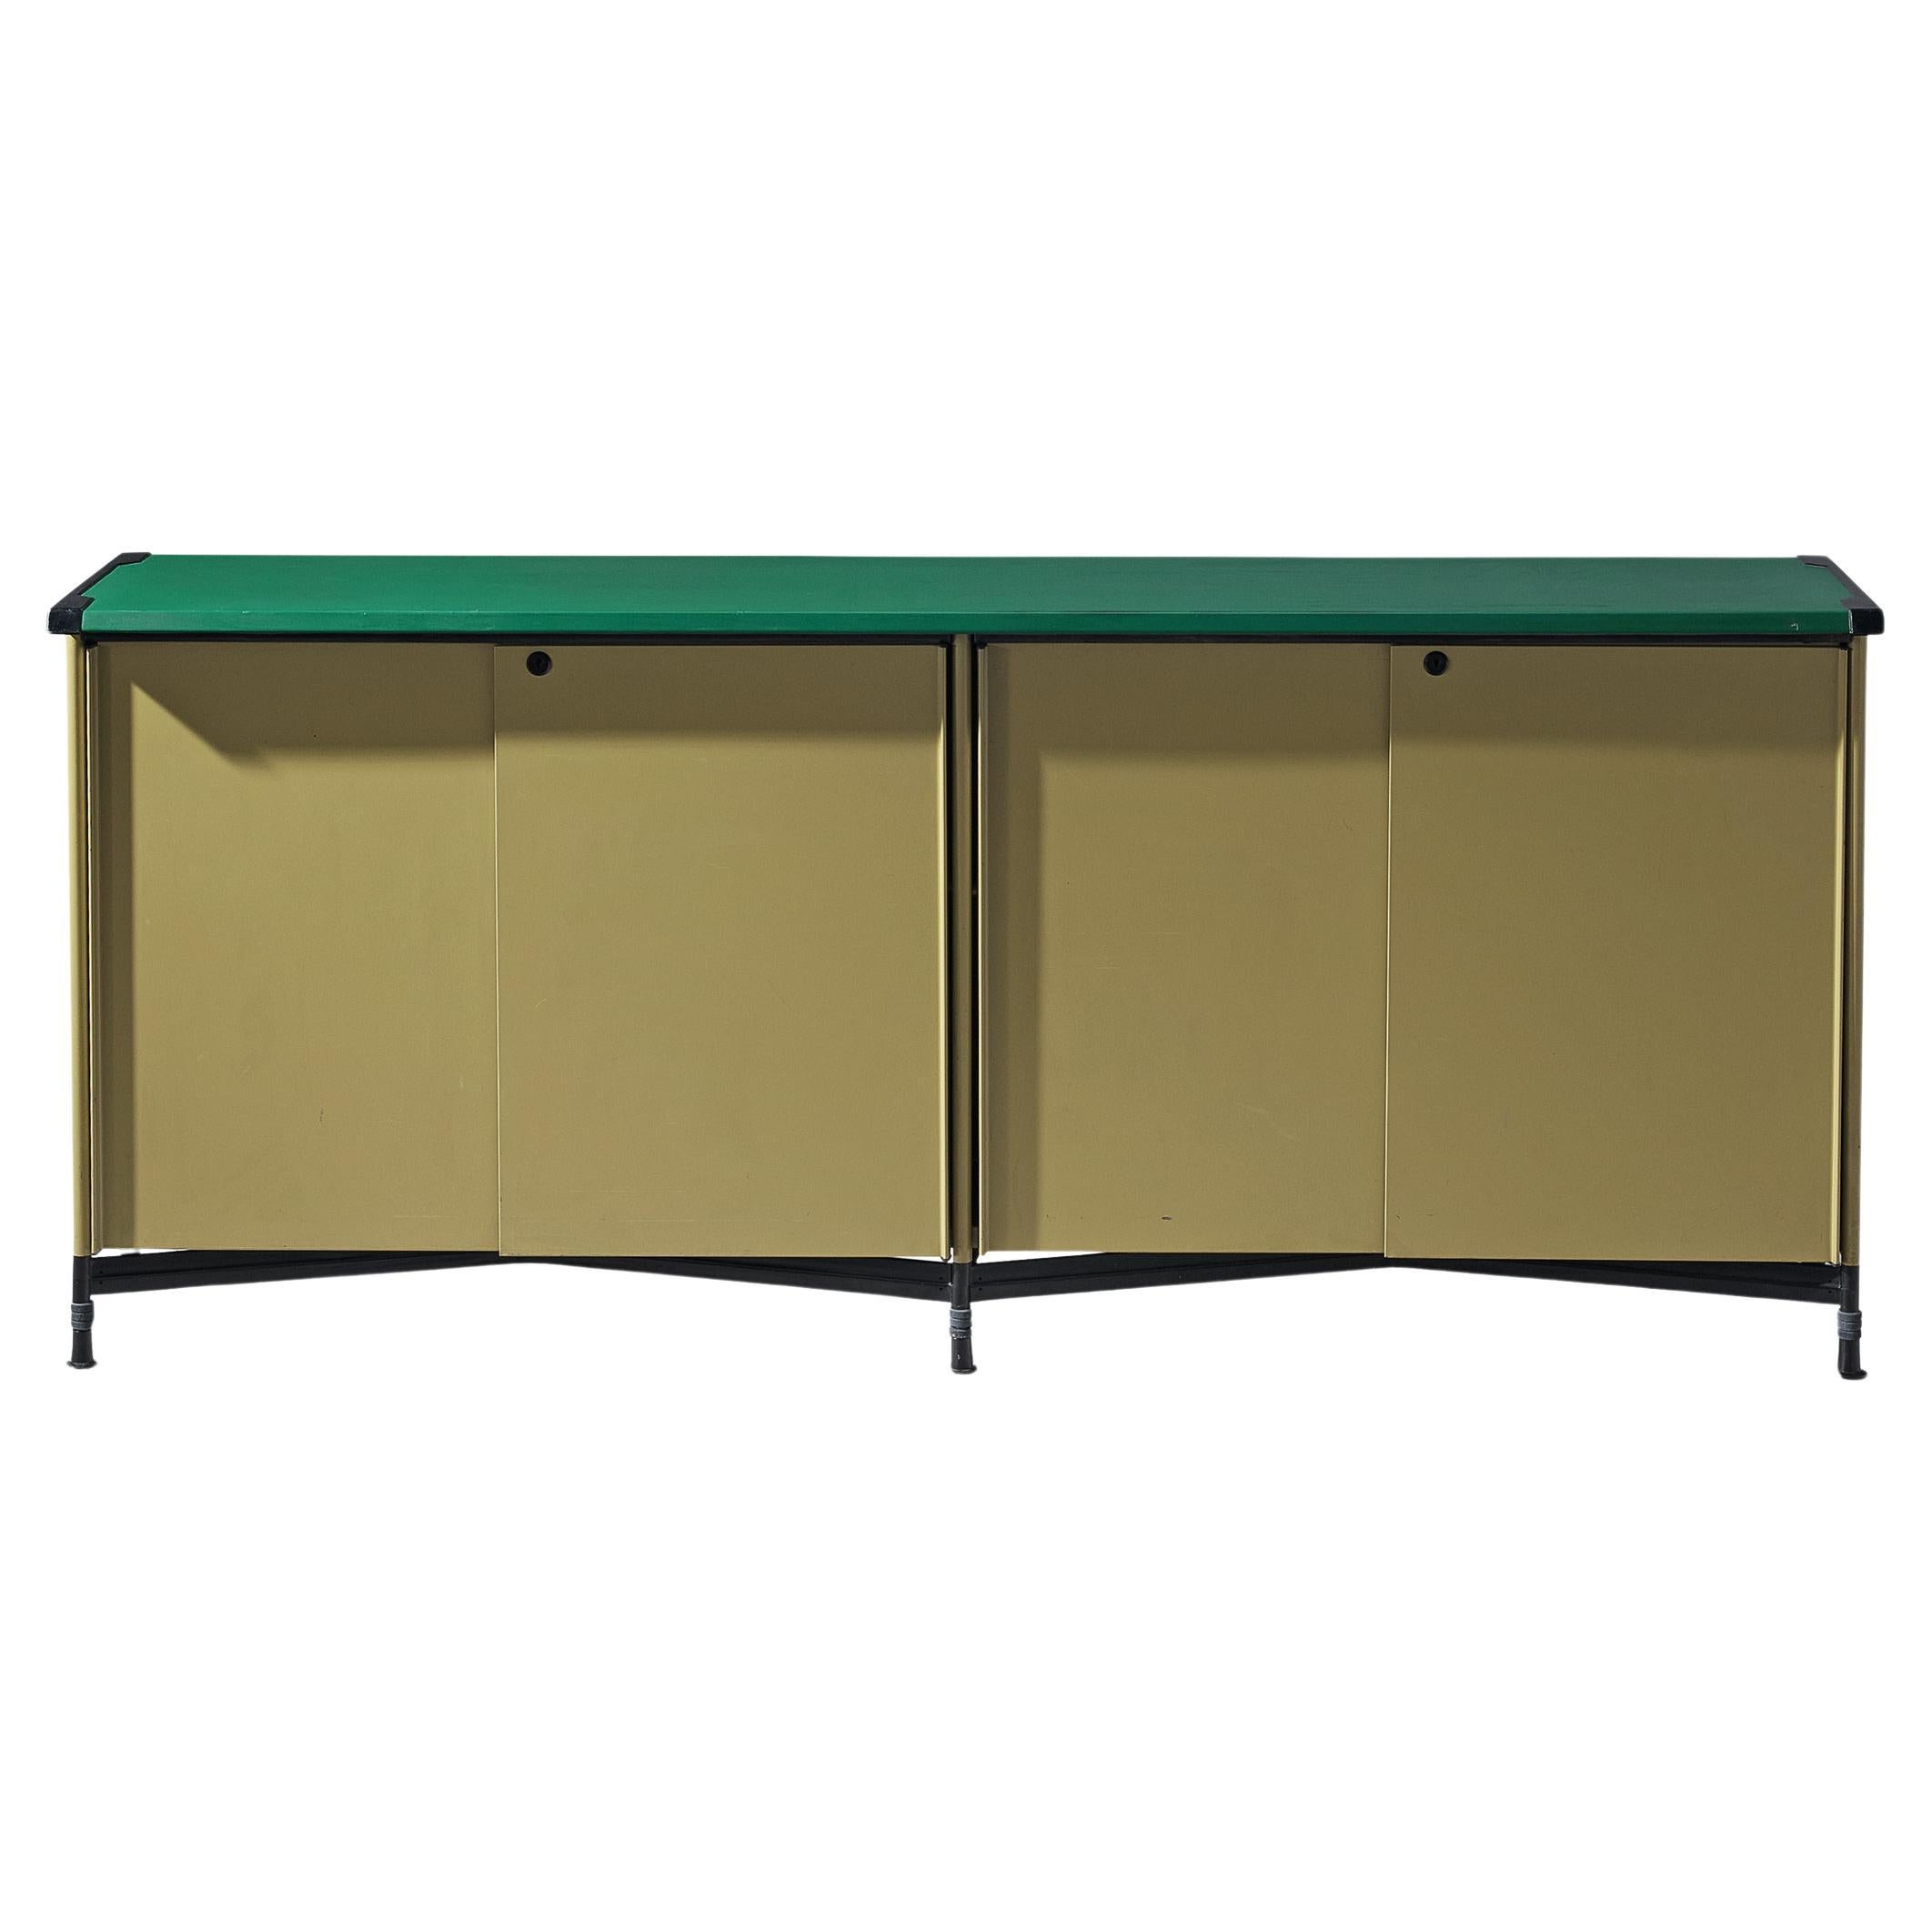 Studio BBPR for Olivetti ‘Spazio’ Sideboard in Green Coated Steel  For Sale